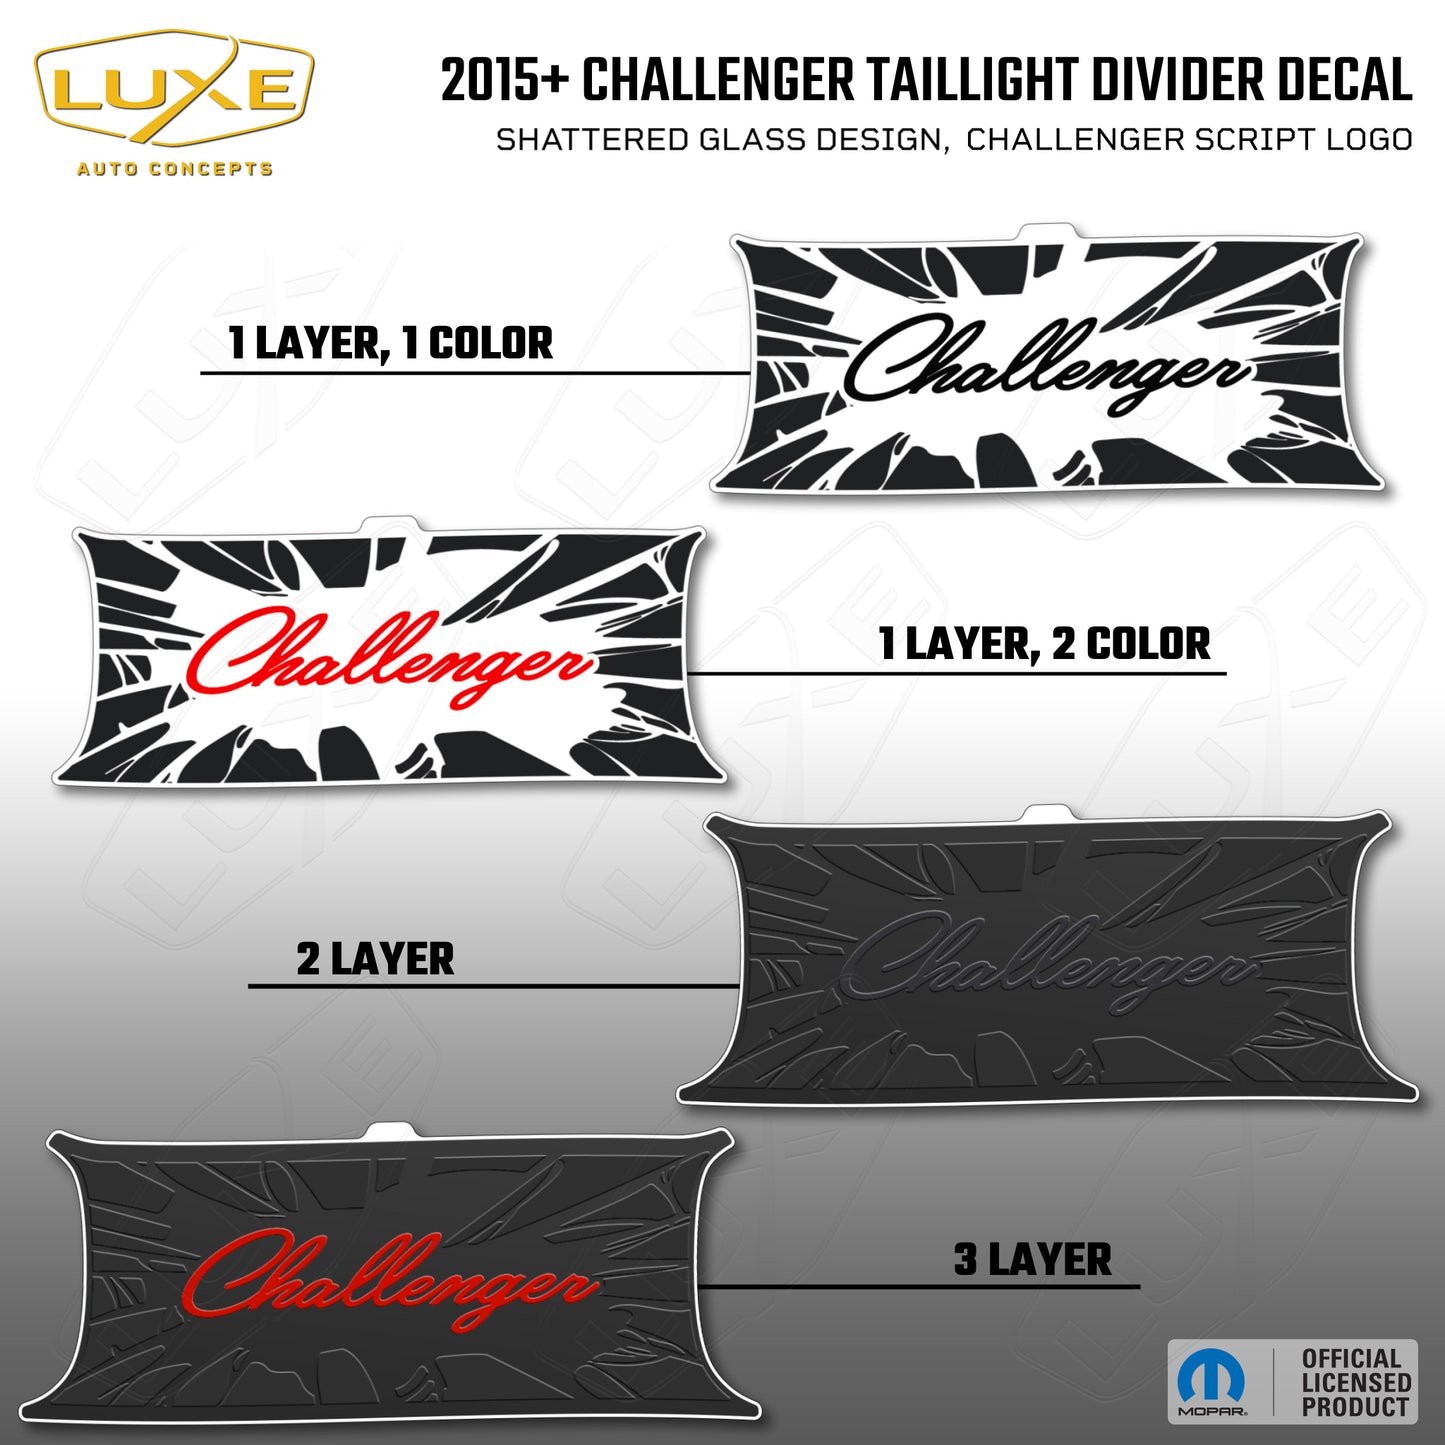 2015+ Challenger Taillight Center Divider Decal - Shattered Glass Design, Challenger Script Logo